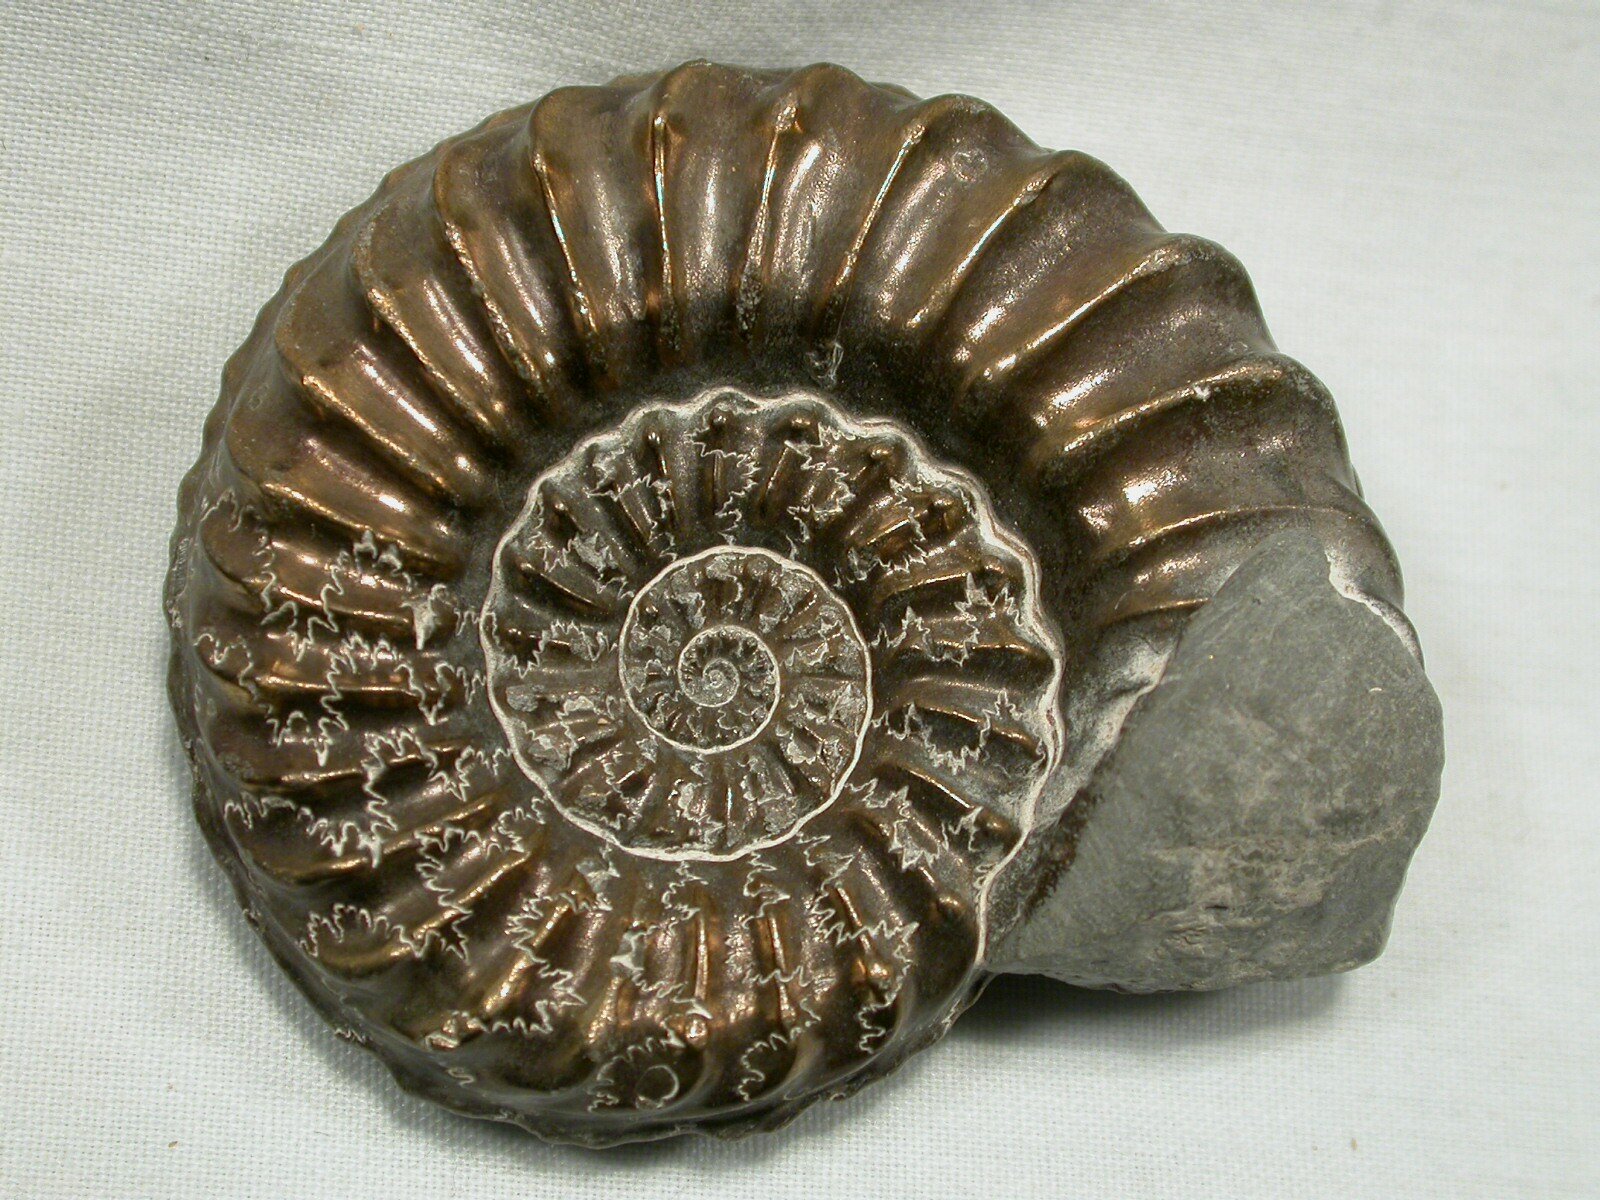 http://www.fossilmuseum.net/Fossil_Galleries/Ammonites/Pleuroceras/Pleuroceras-orig.jpg